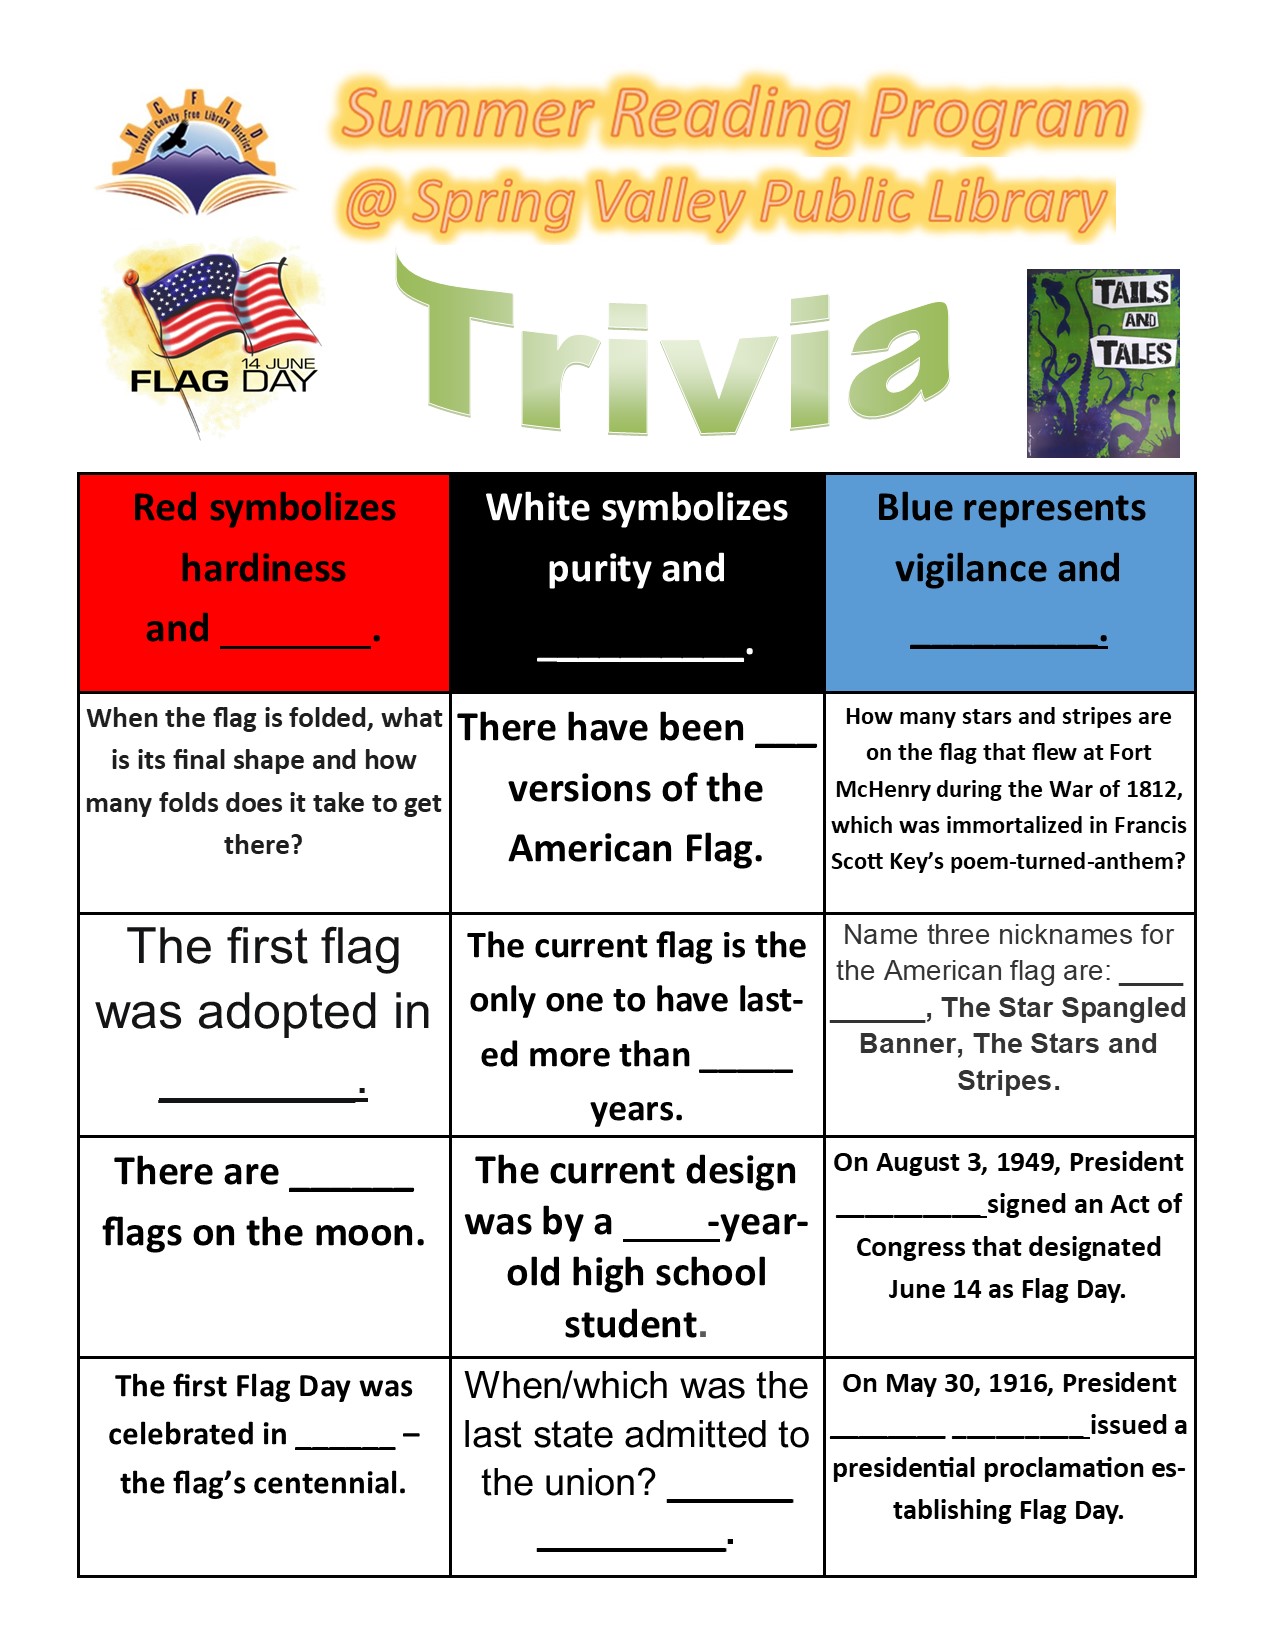 Flag Day Trivia